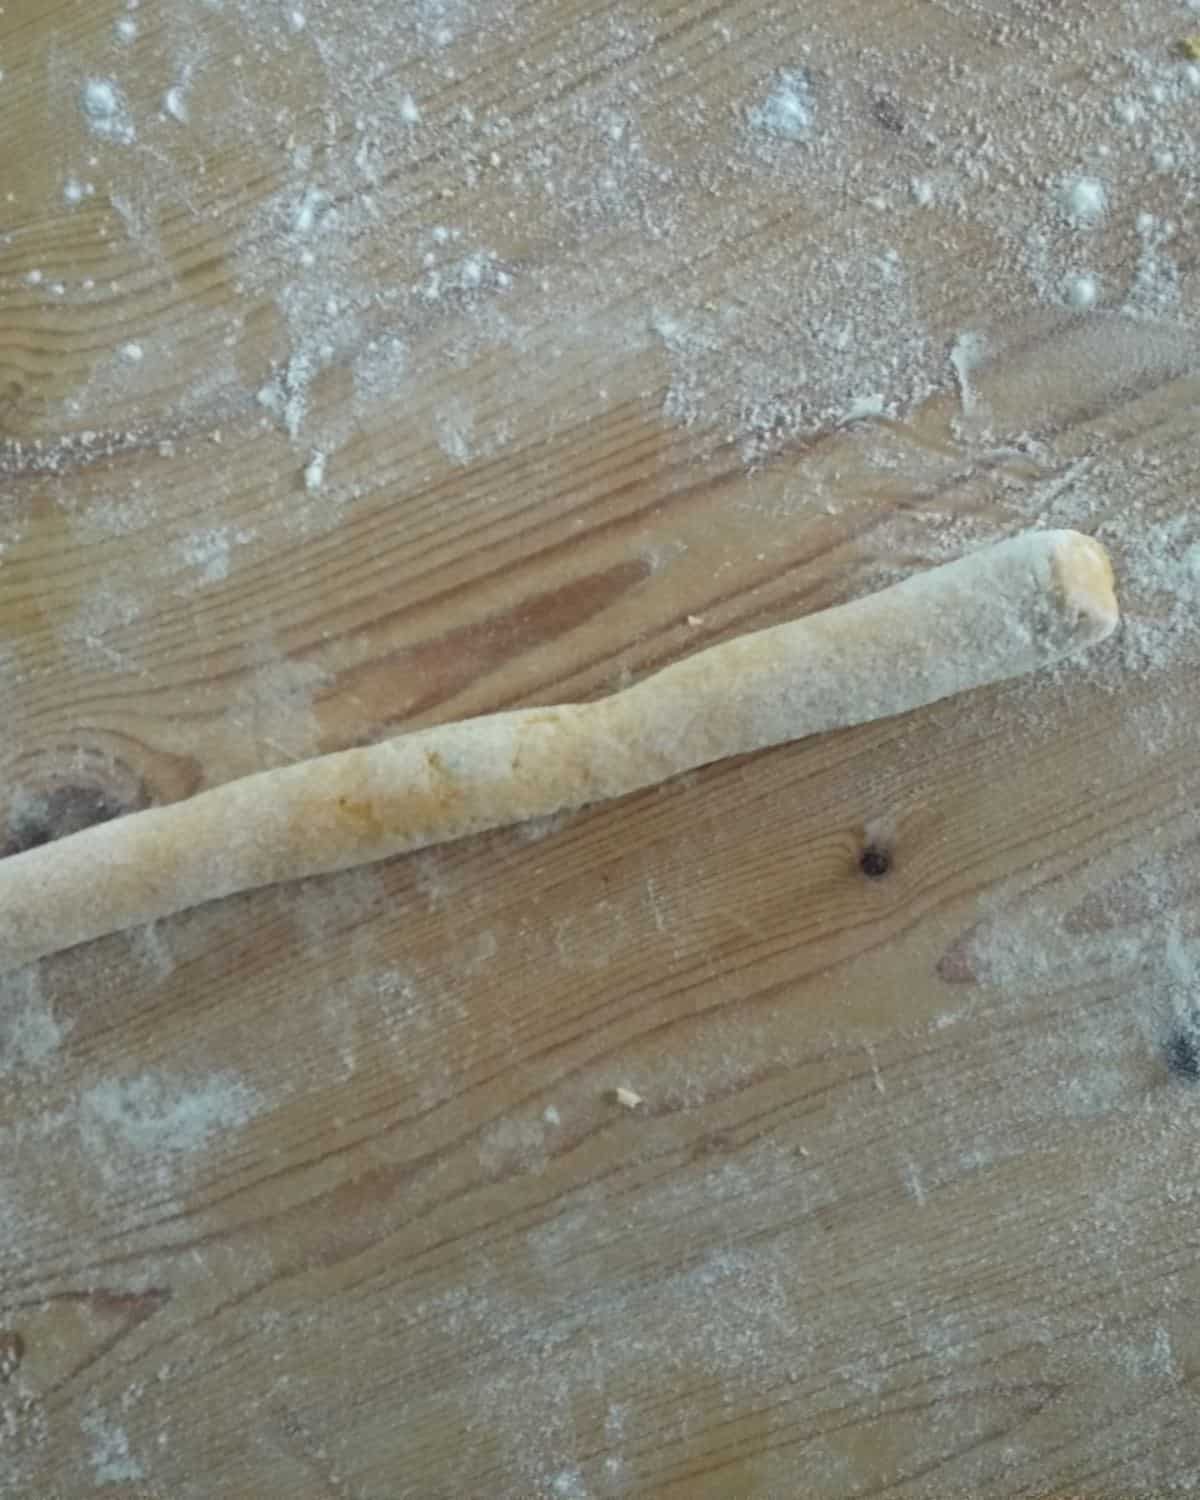 rolled gnocchi dough